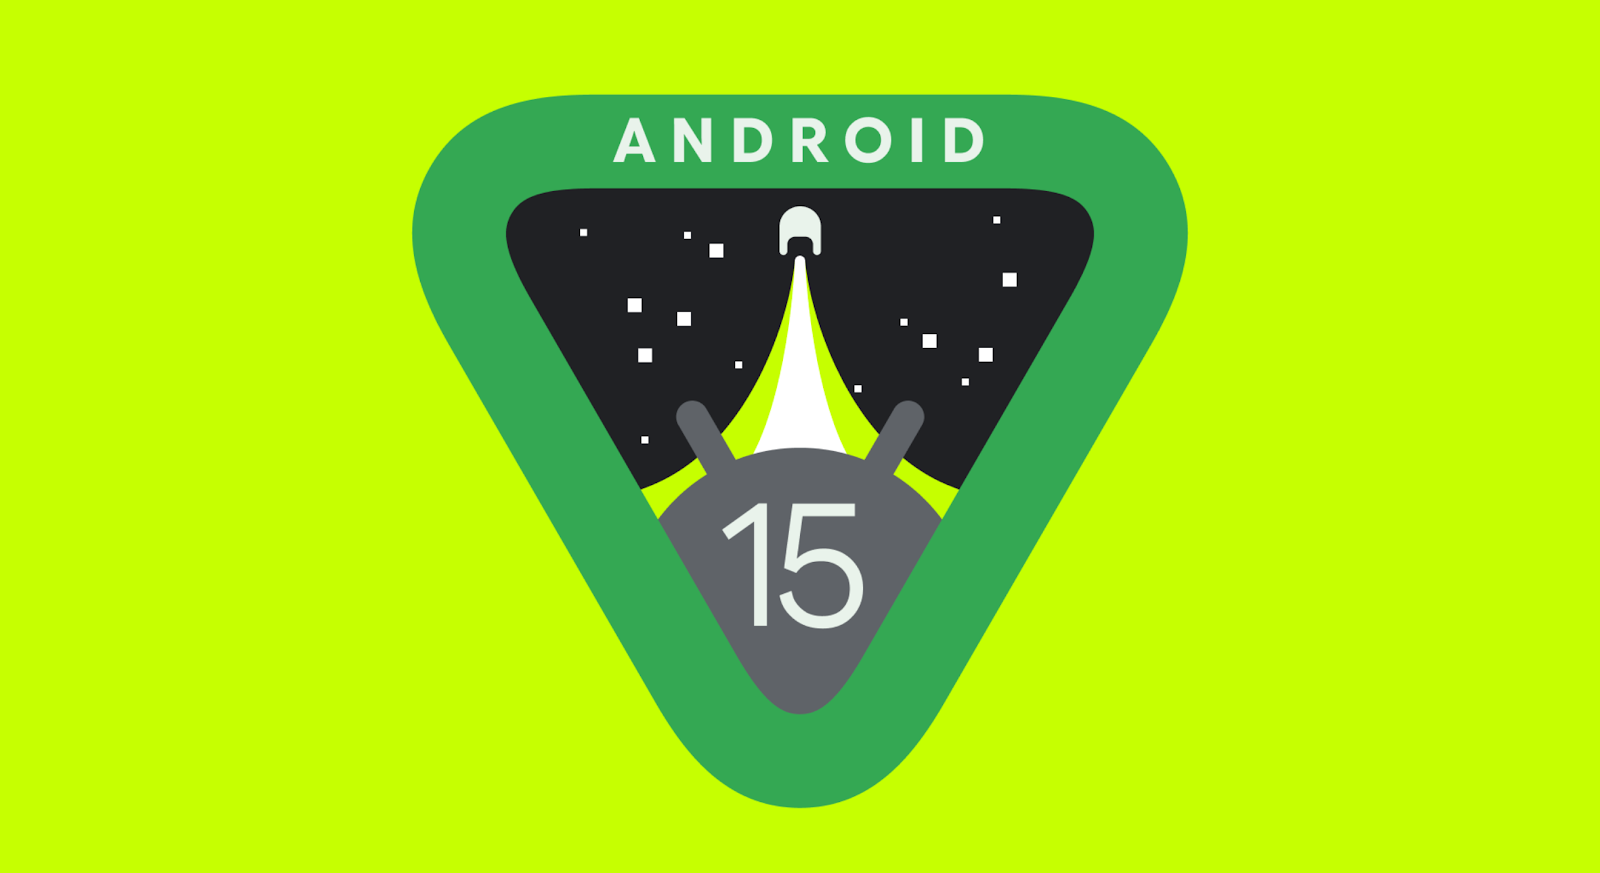 Logo systemu operacyjnego Android 15 na zielonym tle.